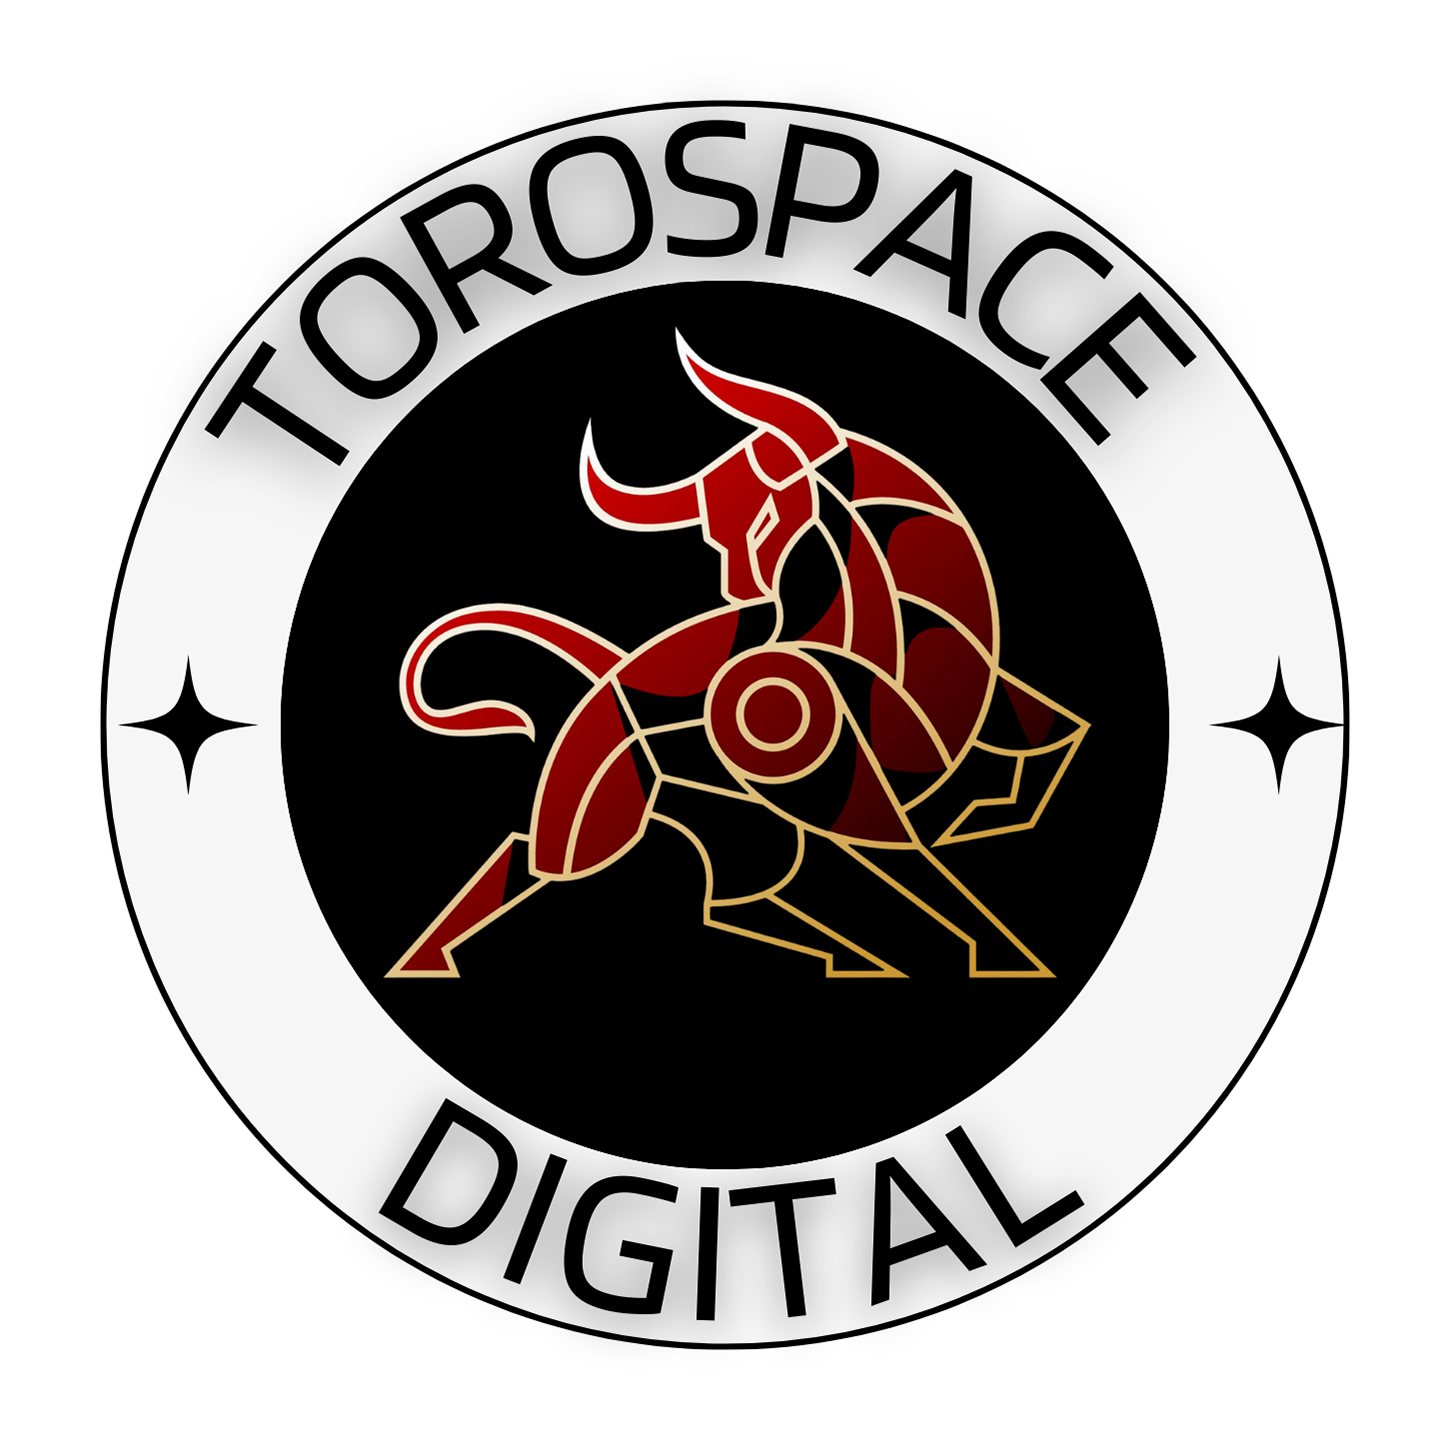 Torospace Digital